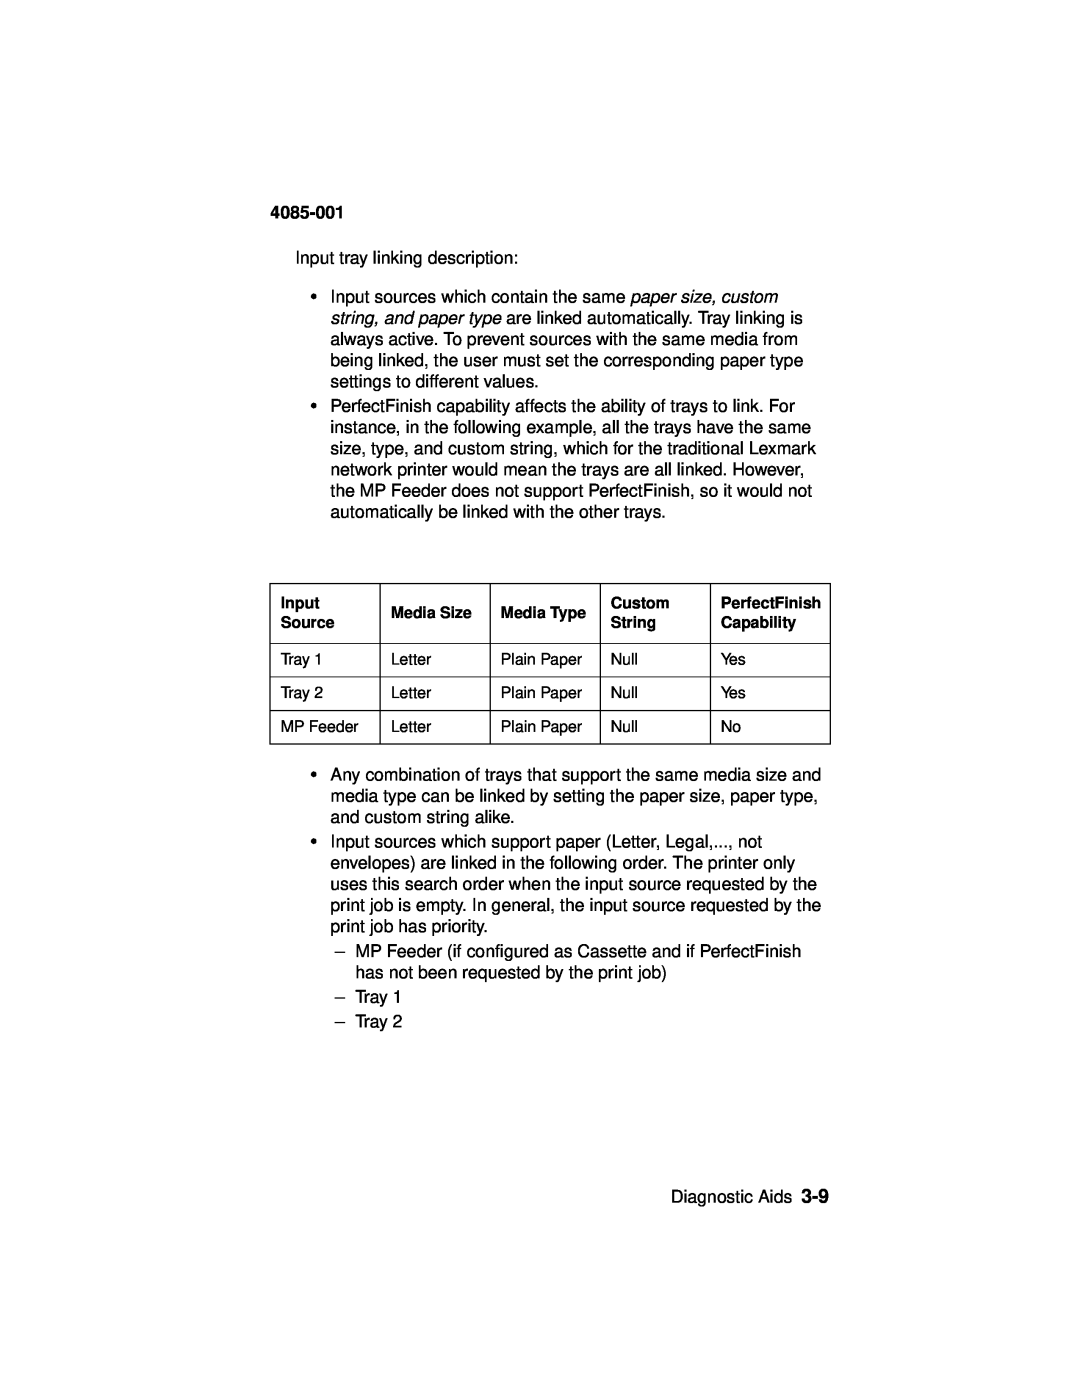 Lexmark Printer, J110 manual 4085-001, Input tray linking description 